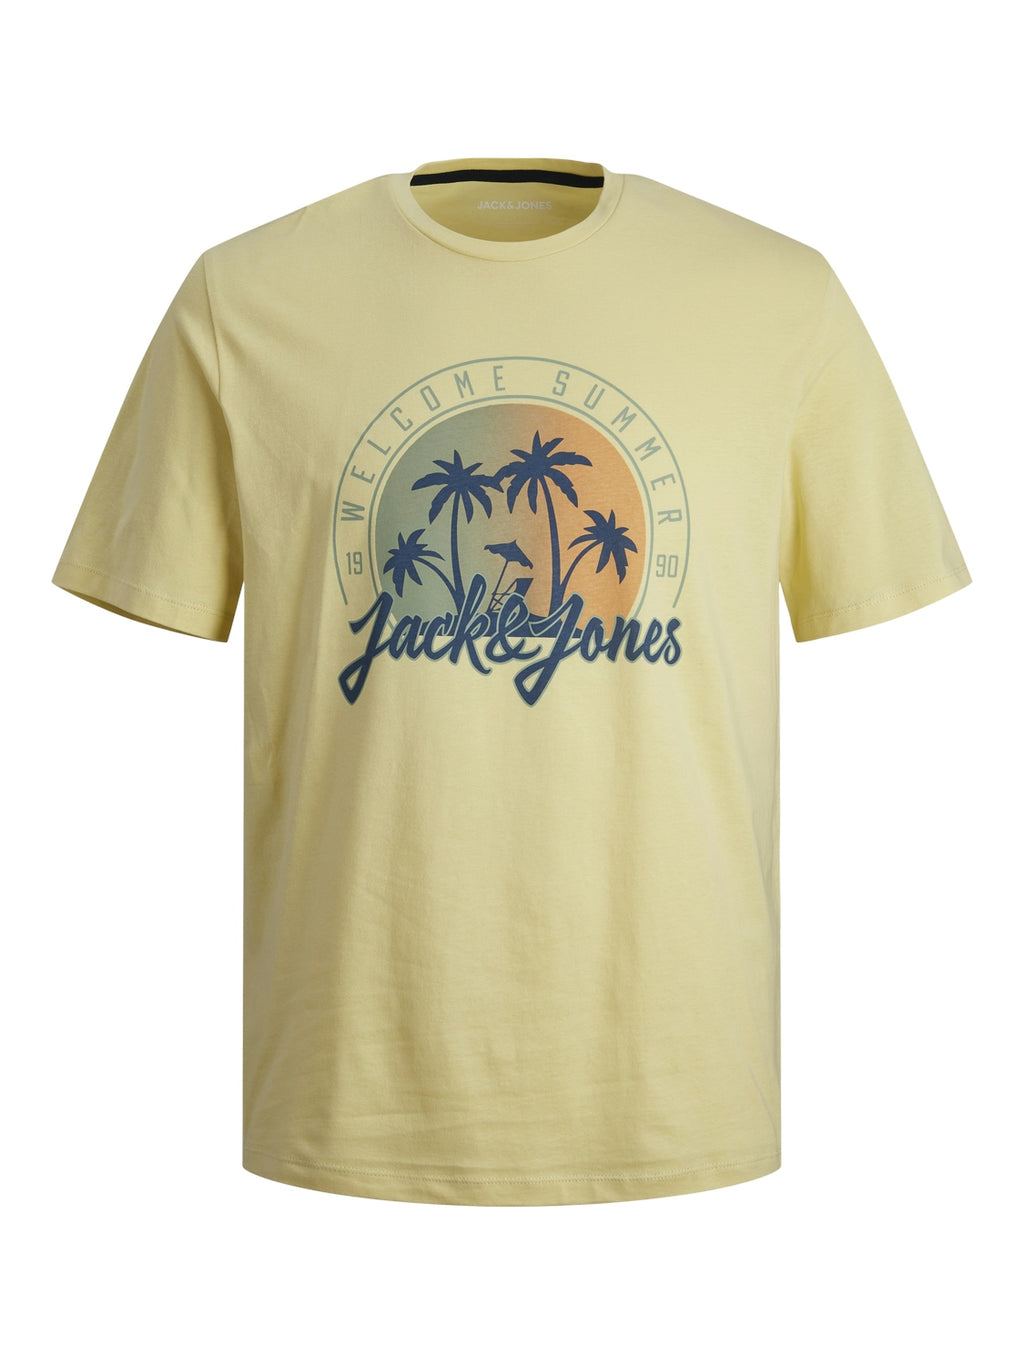 Jack & Jones Summer Vibe Tee Yellow - Raw Menswear